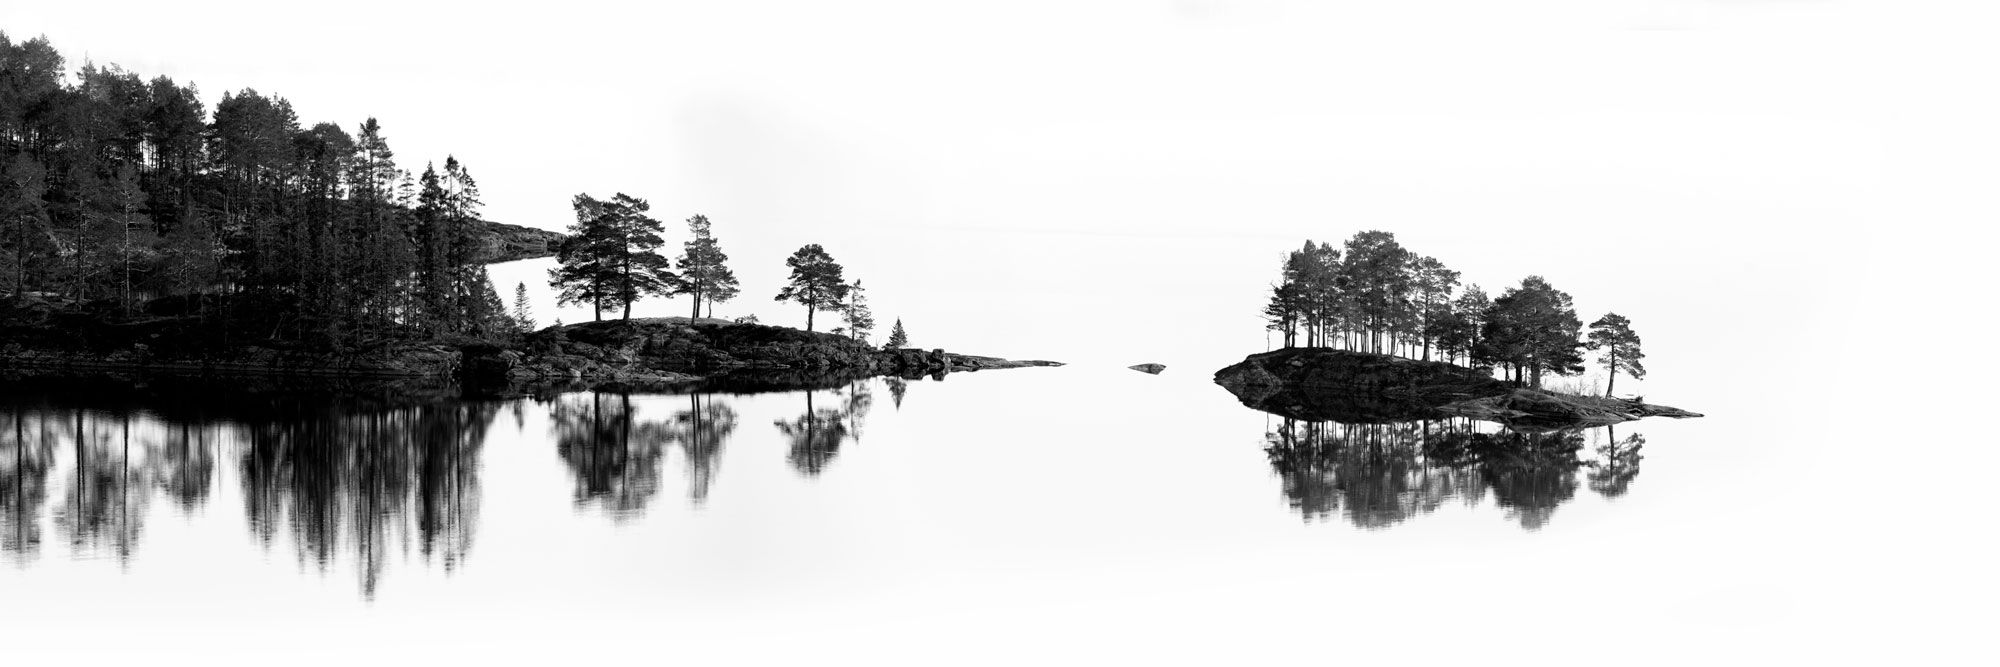 Panorama of the Islands in Lake Snåsavatnet in Norway